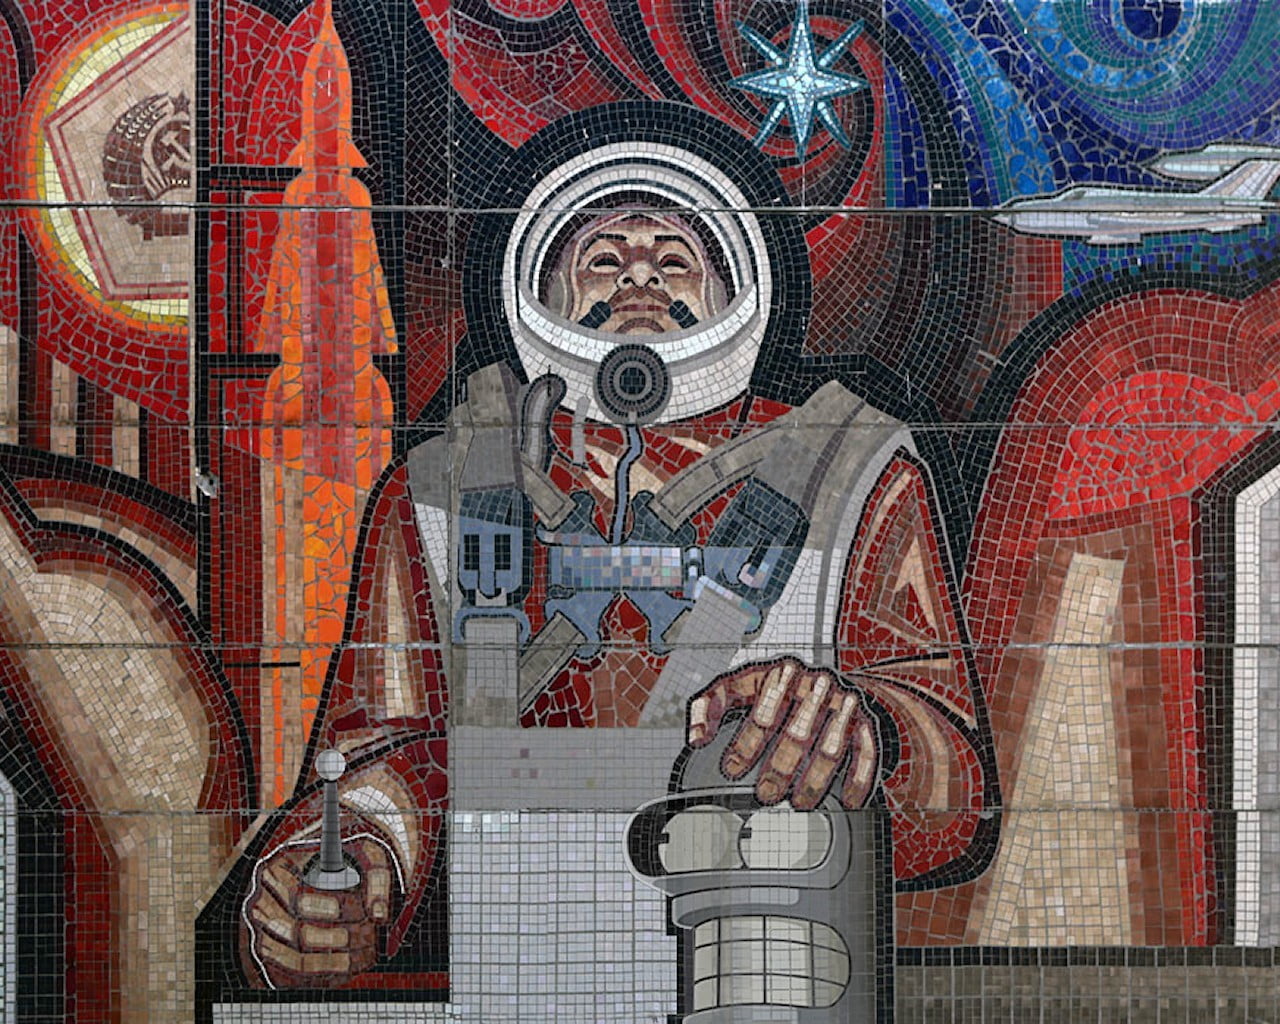 astronaut painting, USSR, mosaic, Bender, art and craft, creativity